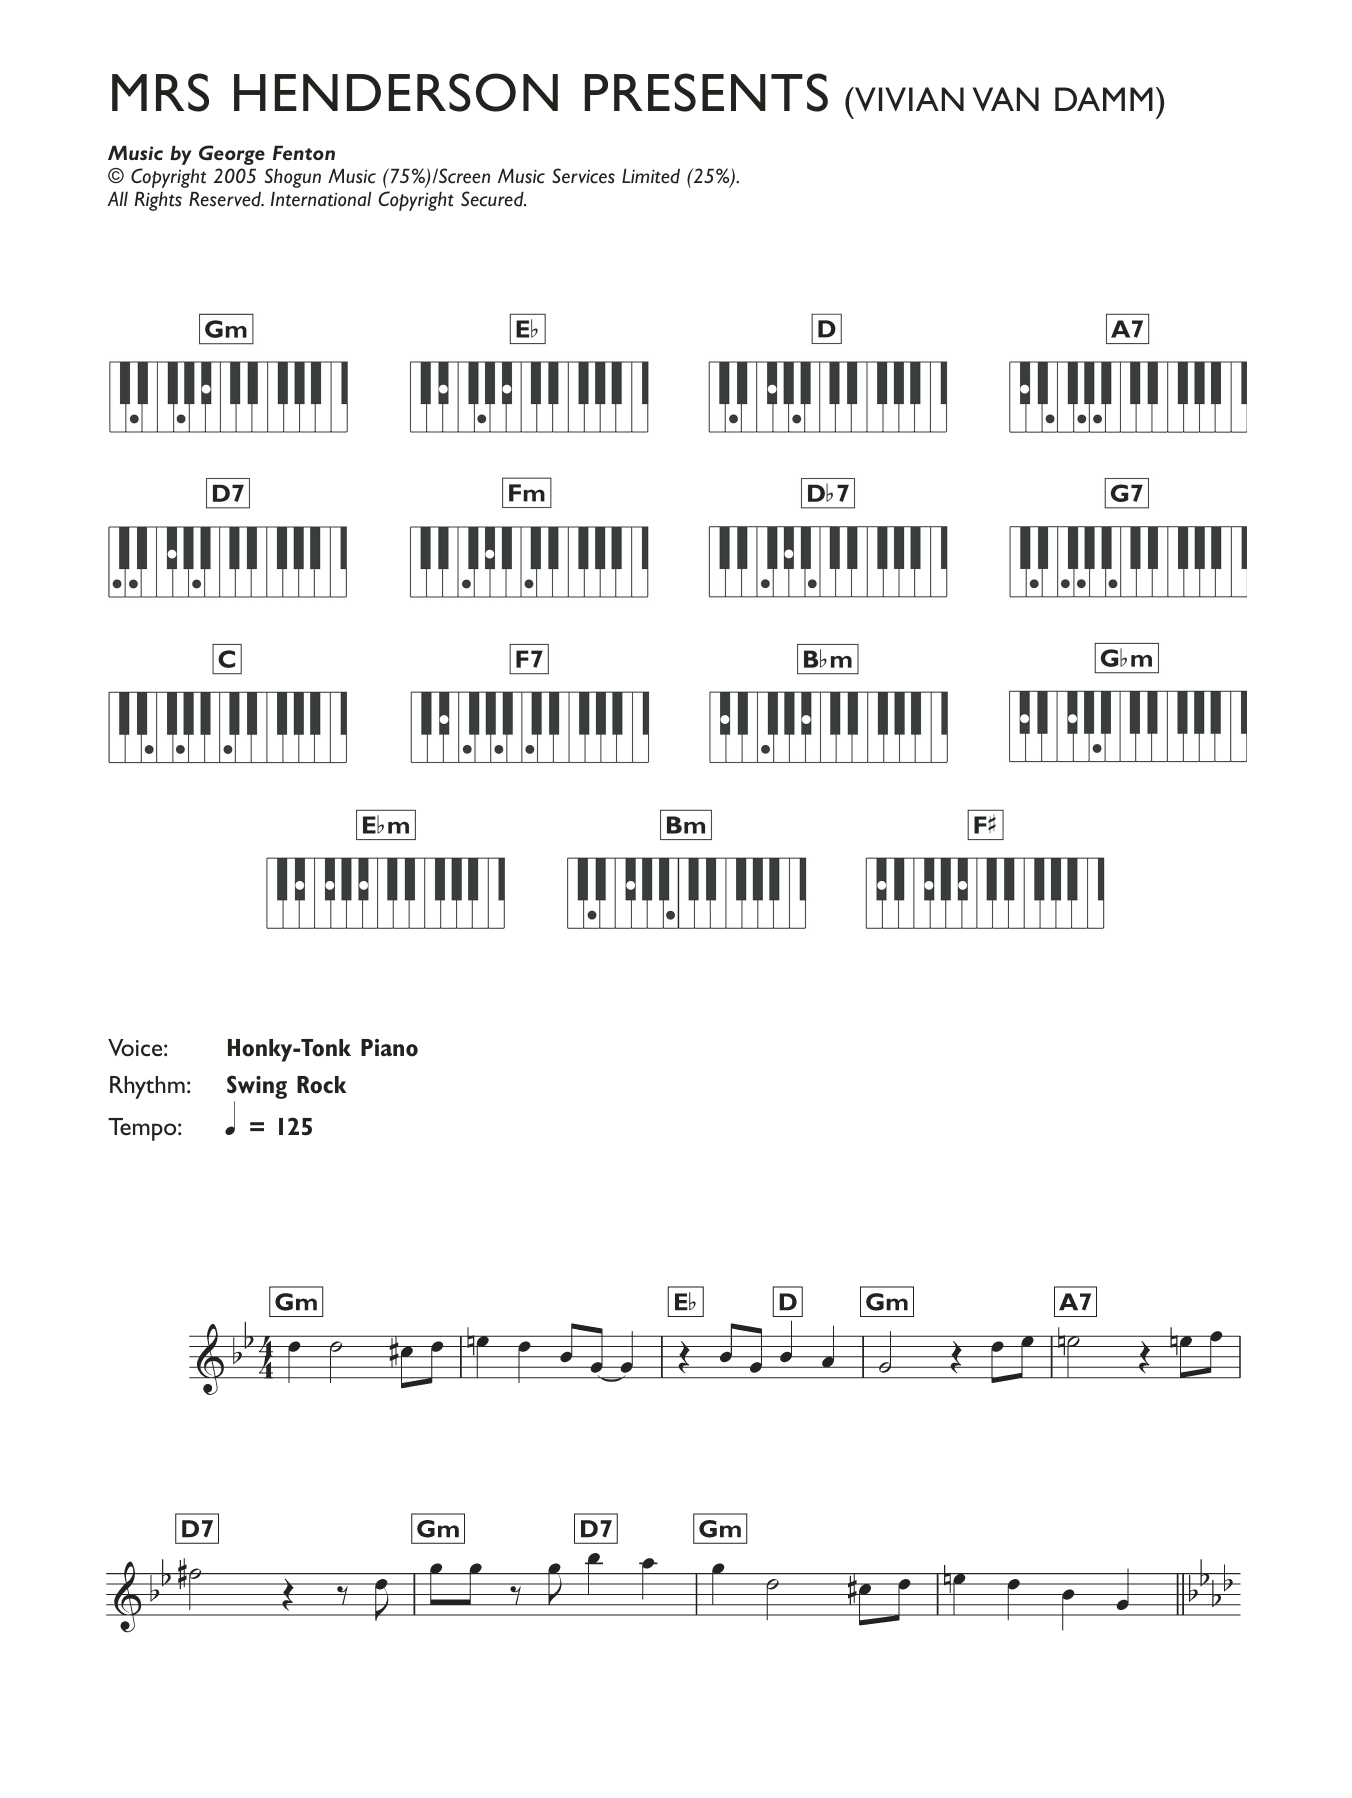 Download George Fenton Vivian Van Damm Sheet Music and learn how to play Keyboard PDF digital score in minutes